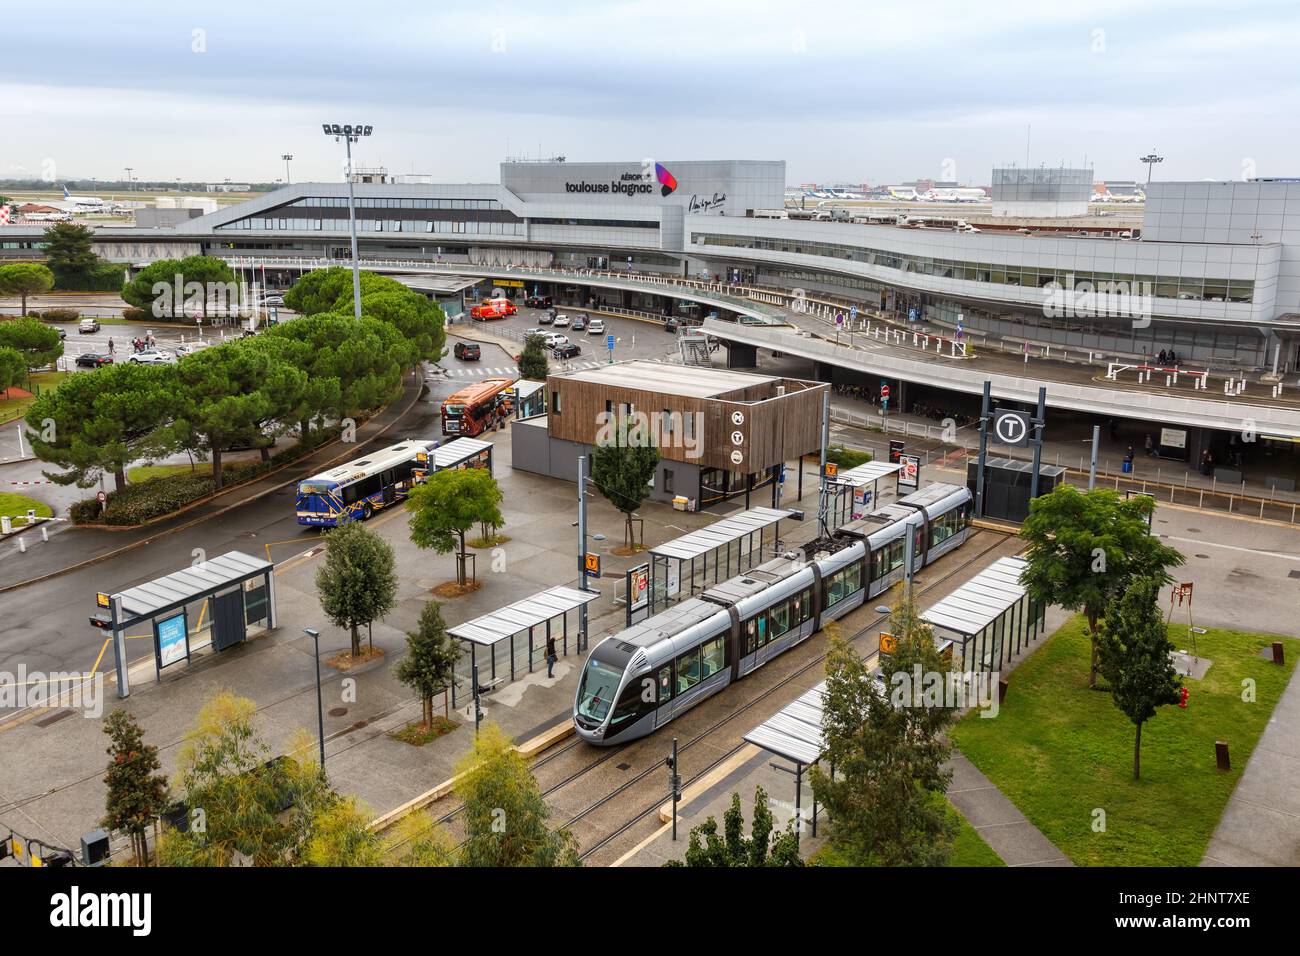 Modern light rail tram model Alstom Citadis public transport transit at Blagnac airport in Toulouse, France Stock Photo